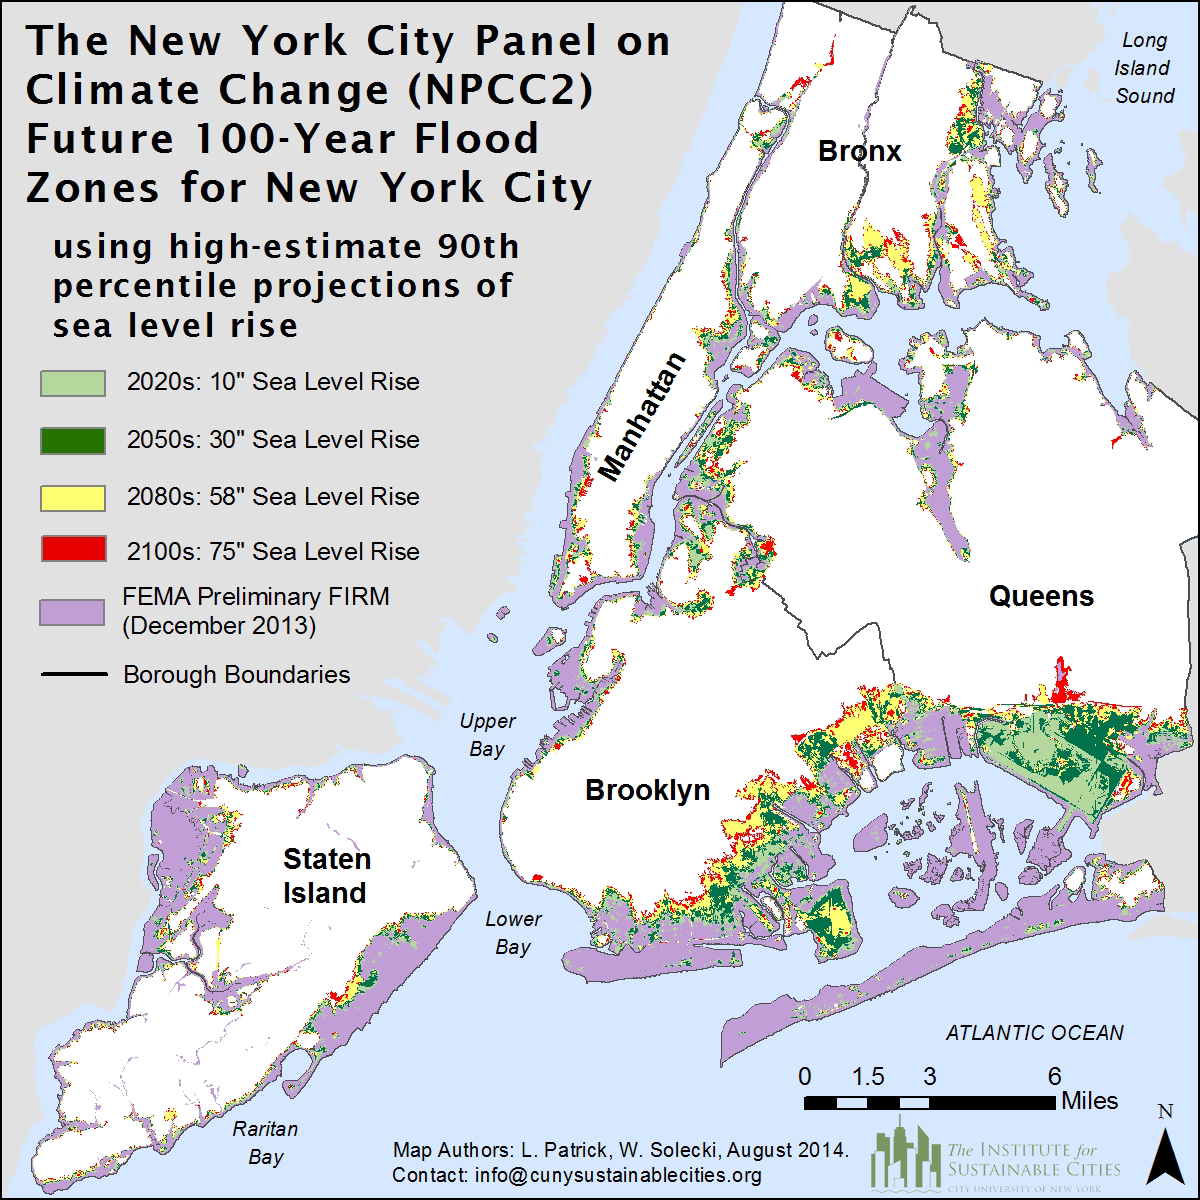 Future 100-year flood zones for New York City based on the high-estimate 90th percentile NPCC2 sea level rise scenario.